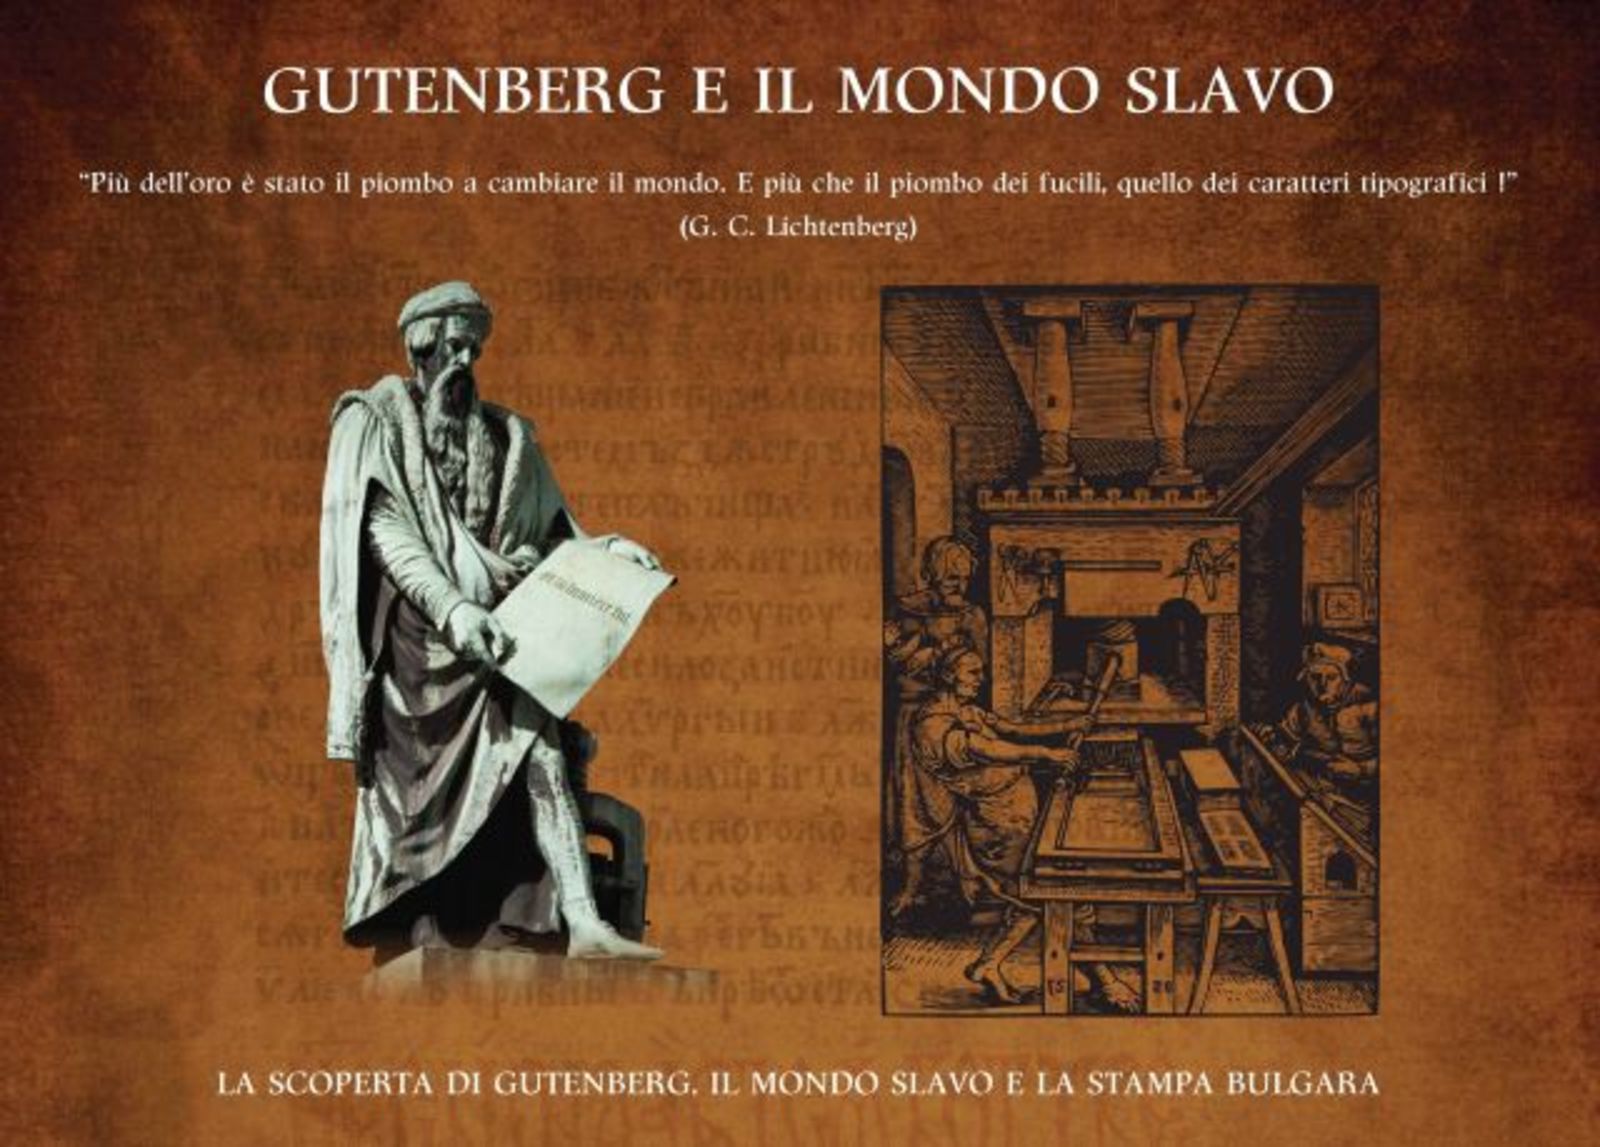 Presentation of the 'Gutenberg and the Slavonic World' Exhibition at Ca' Foscari  University of Venice